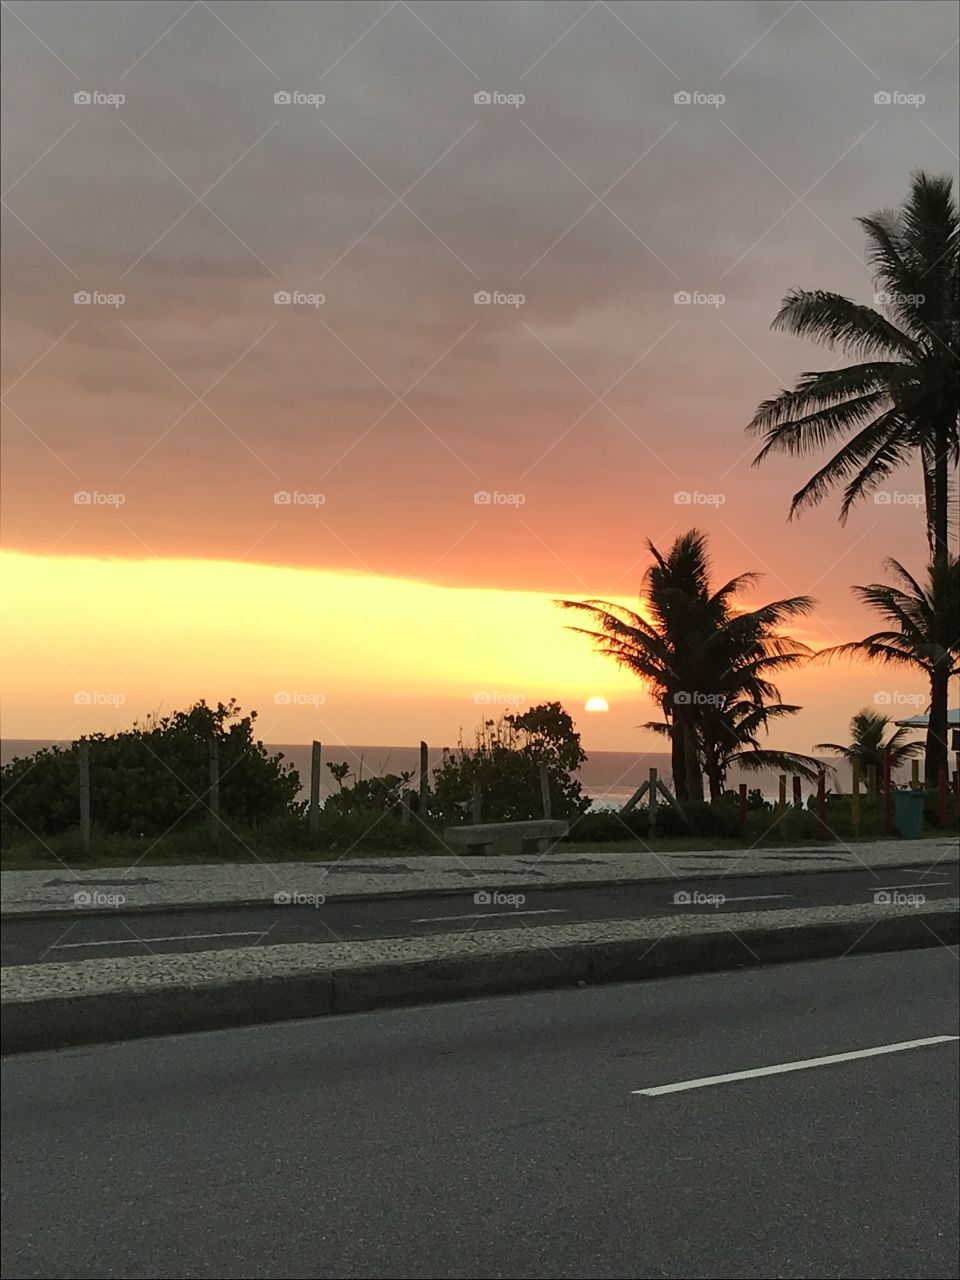 Sunset
Rio/Brazil 